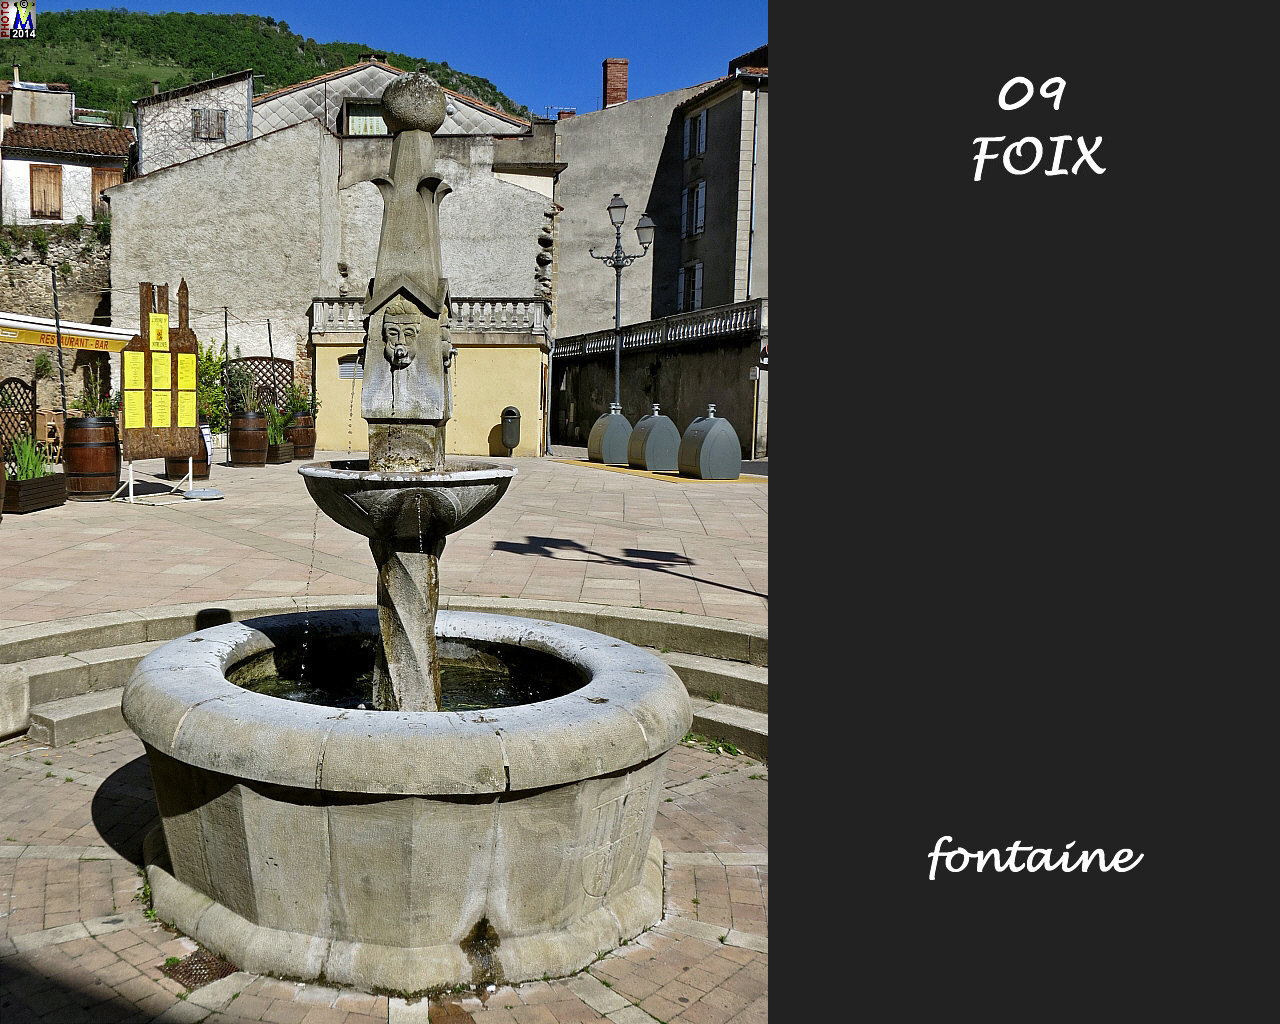 09FOIX_fontaine_102.jpg